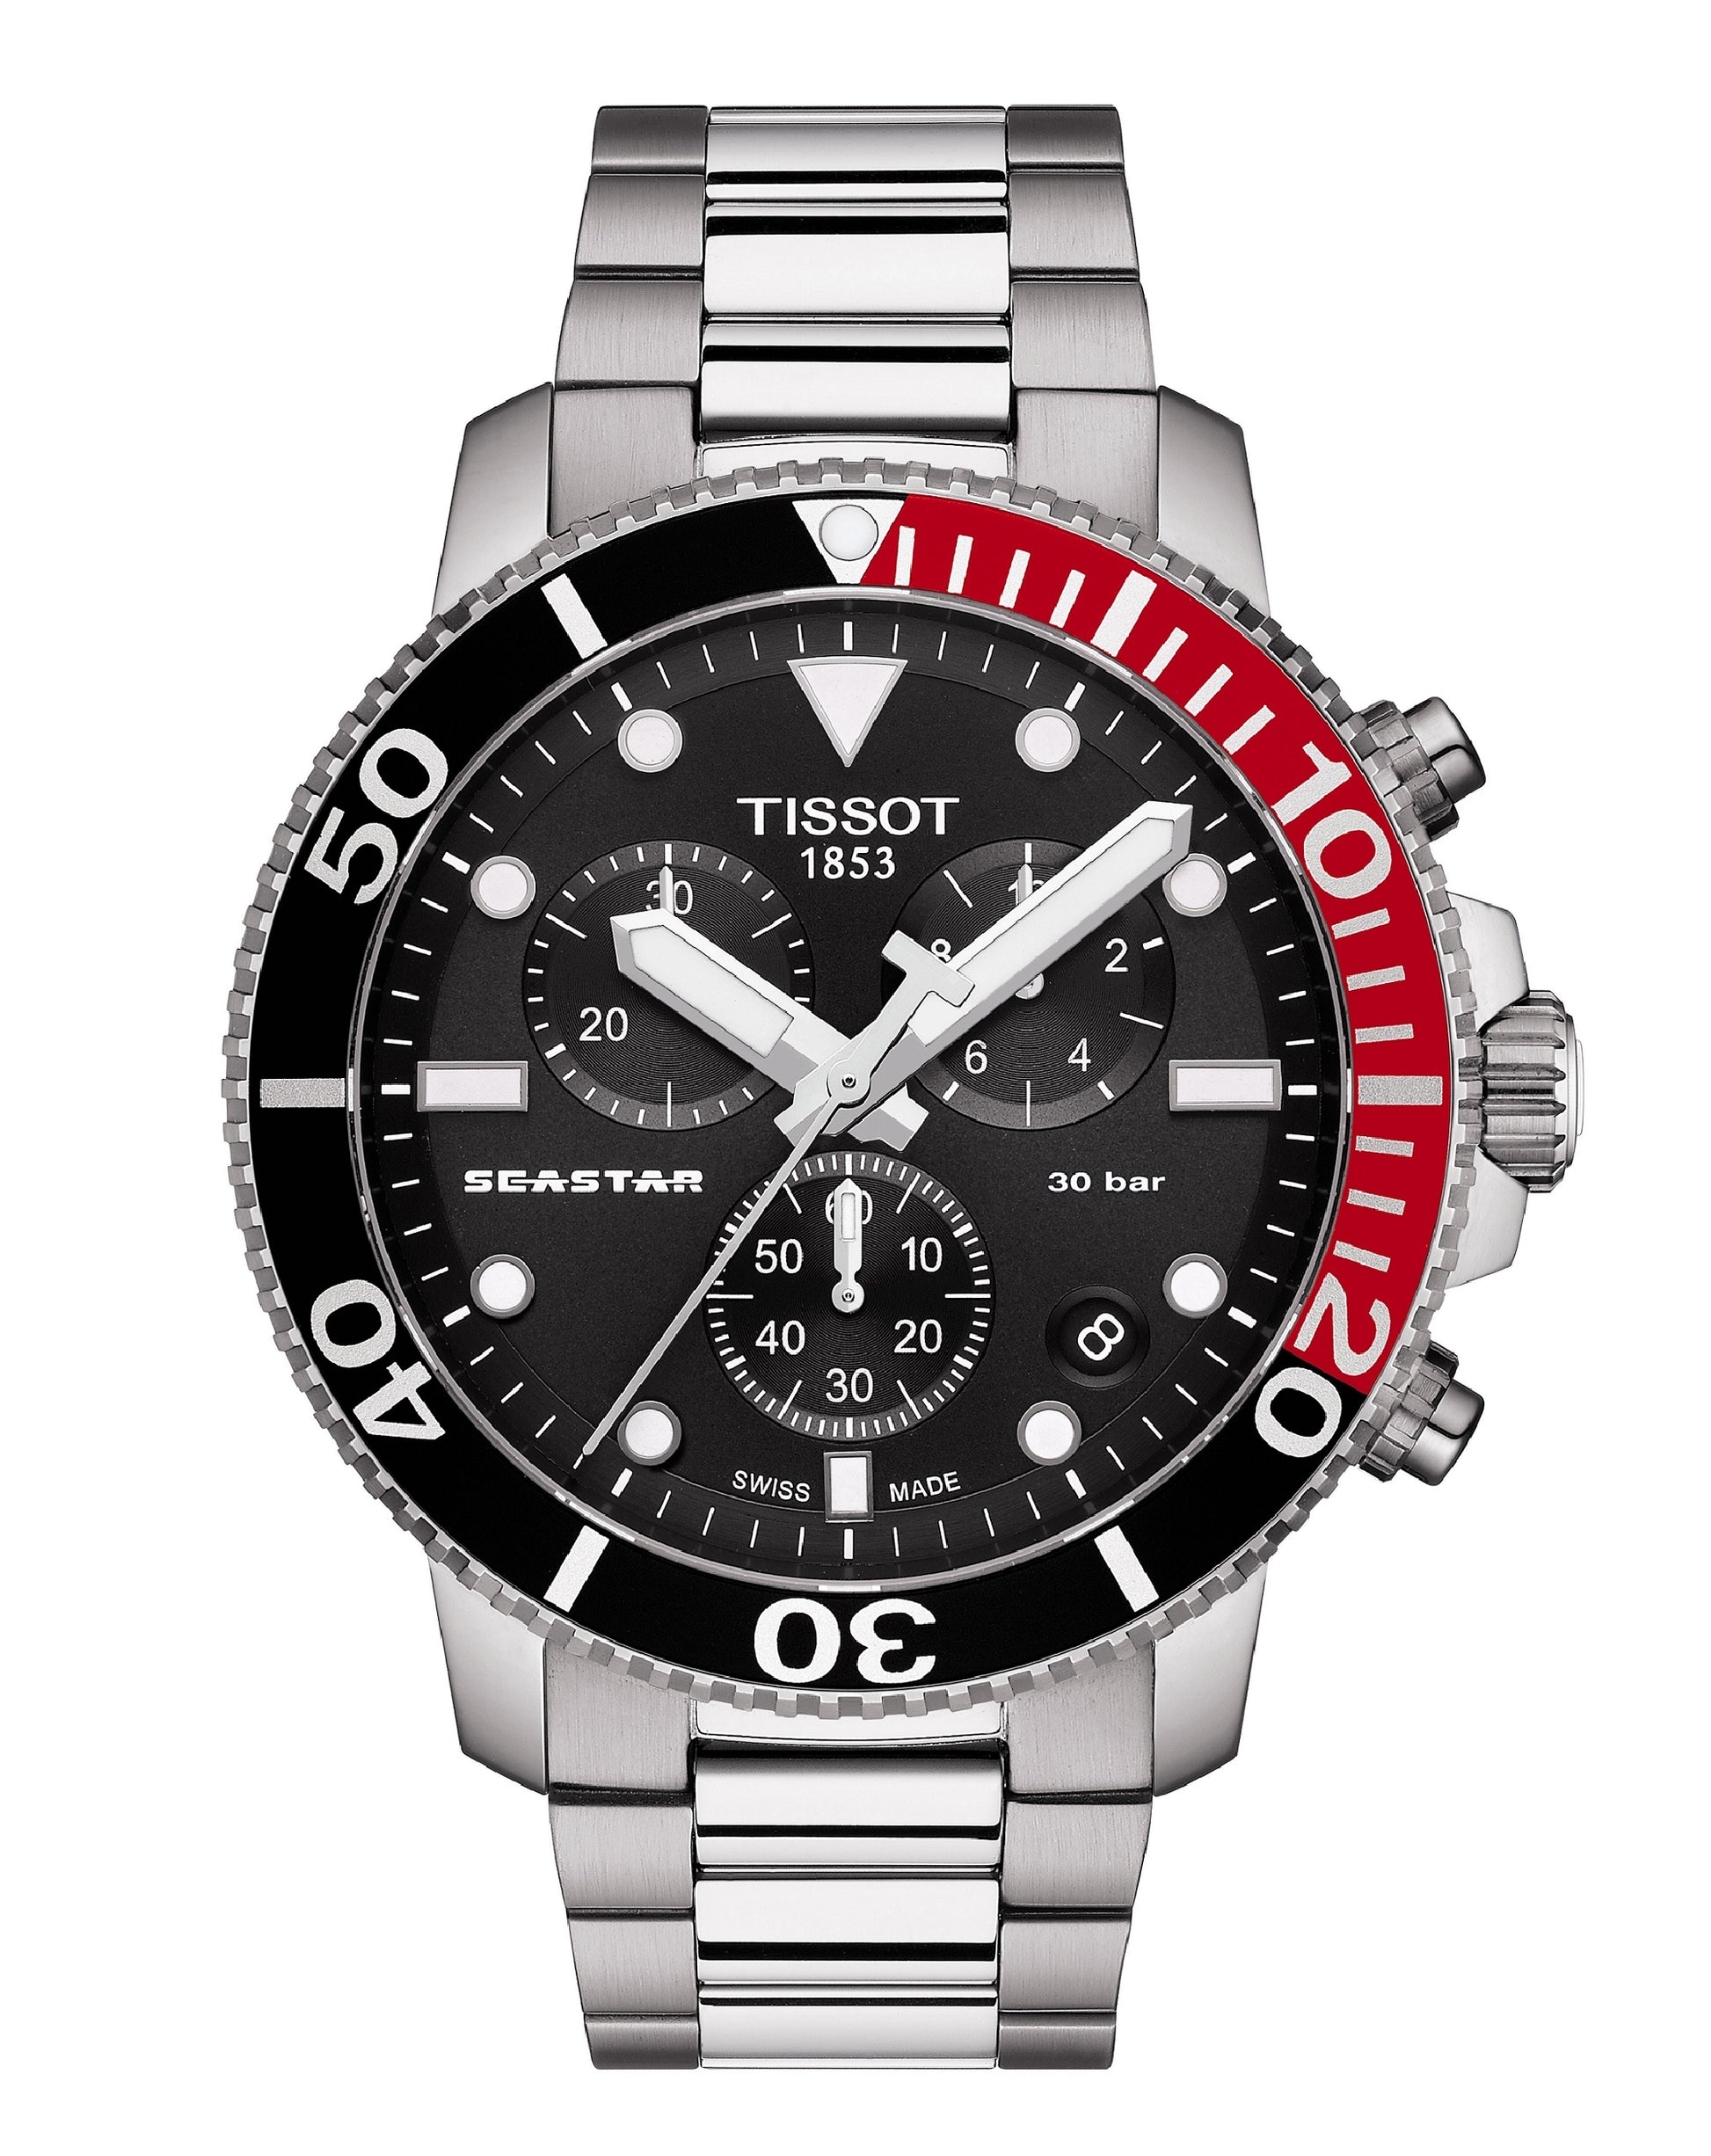 Tissot T120.417.11.051.01 TISSOT Seastar 1000 CHRONOGRAPH Black Dial Watch